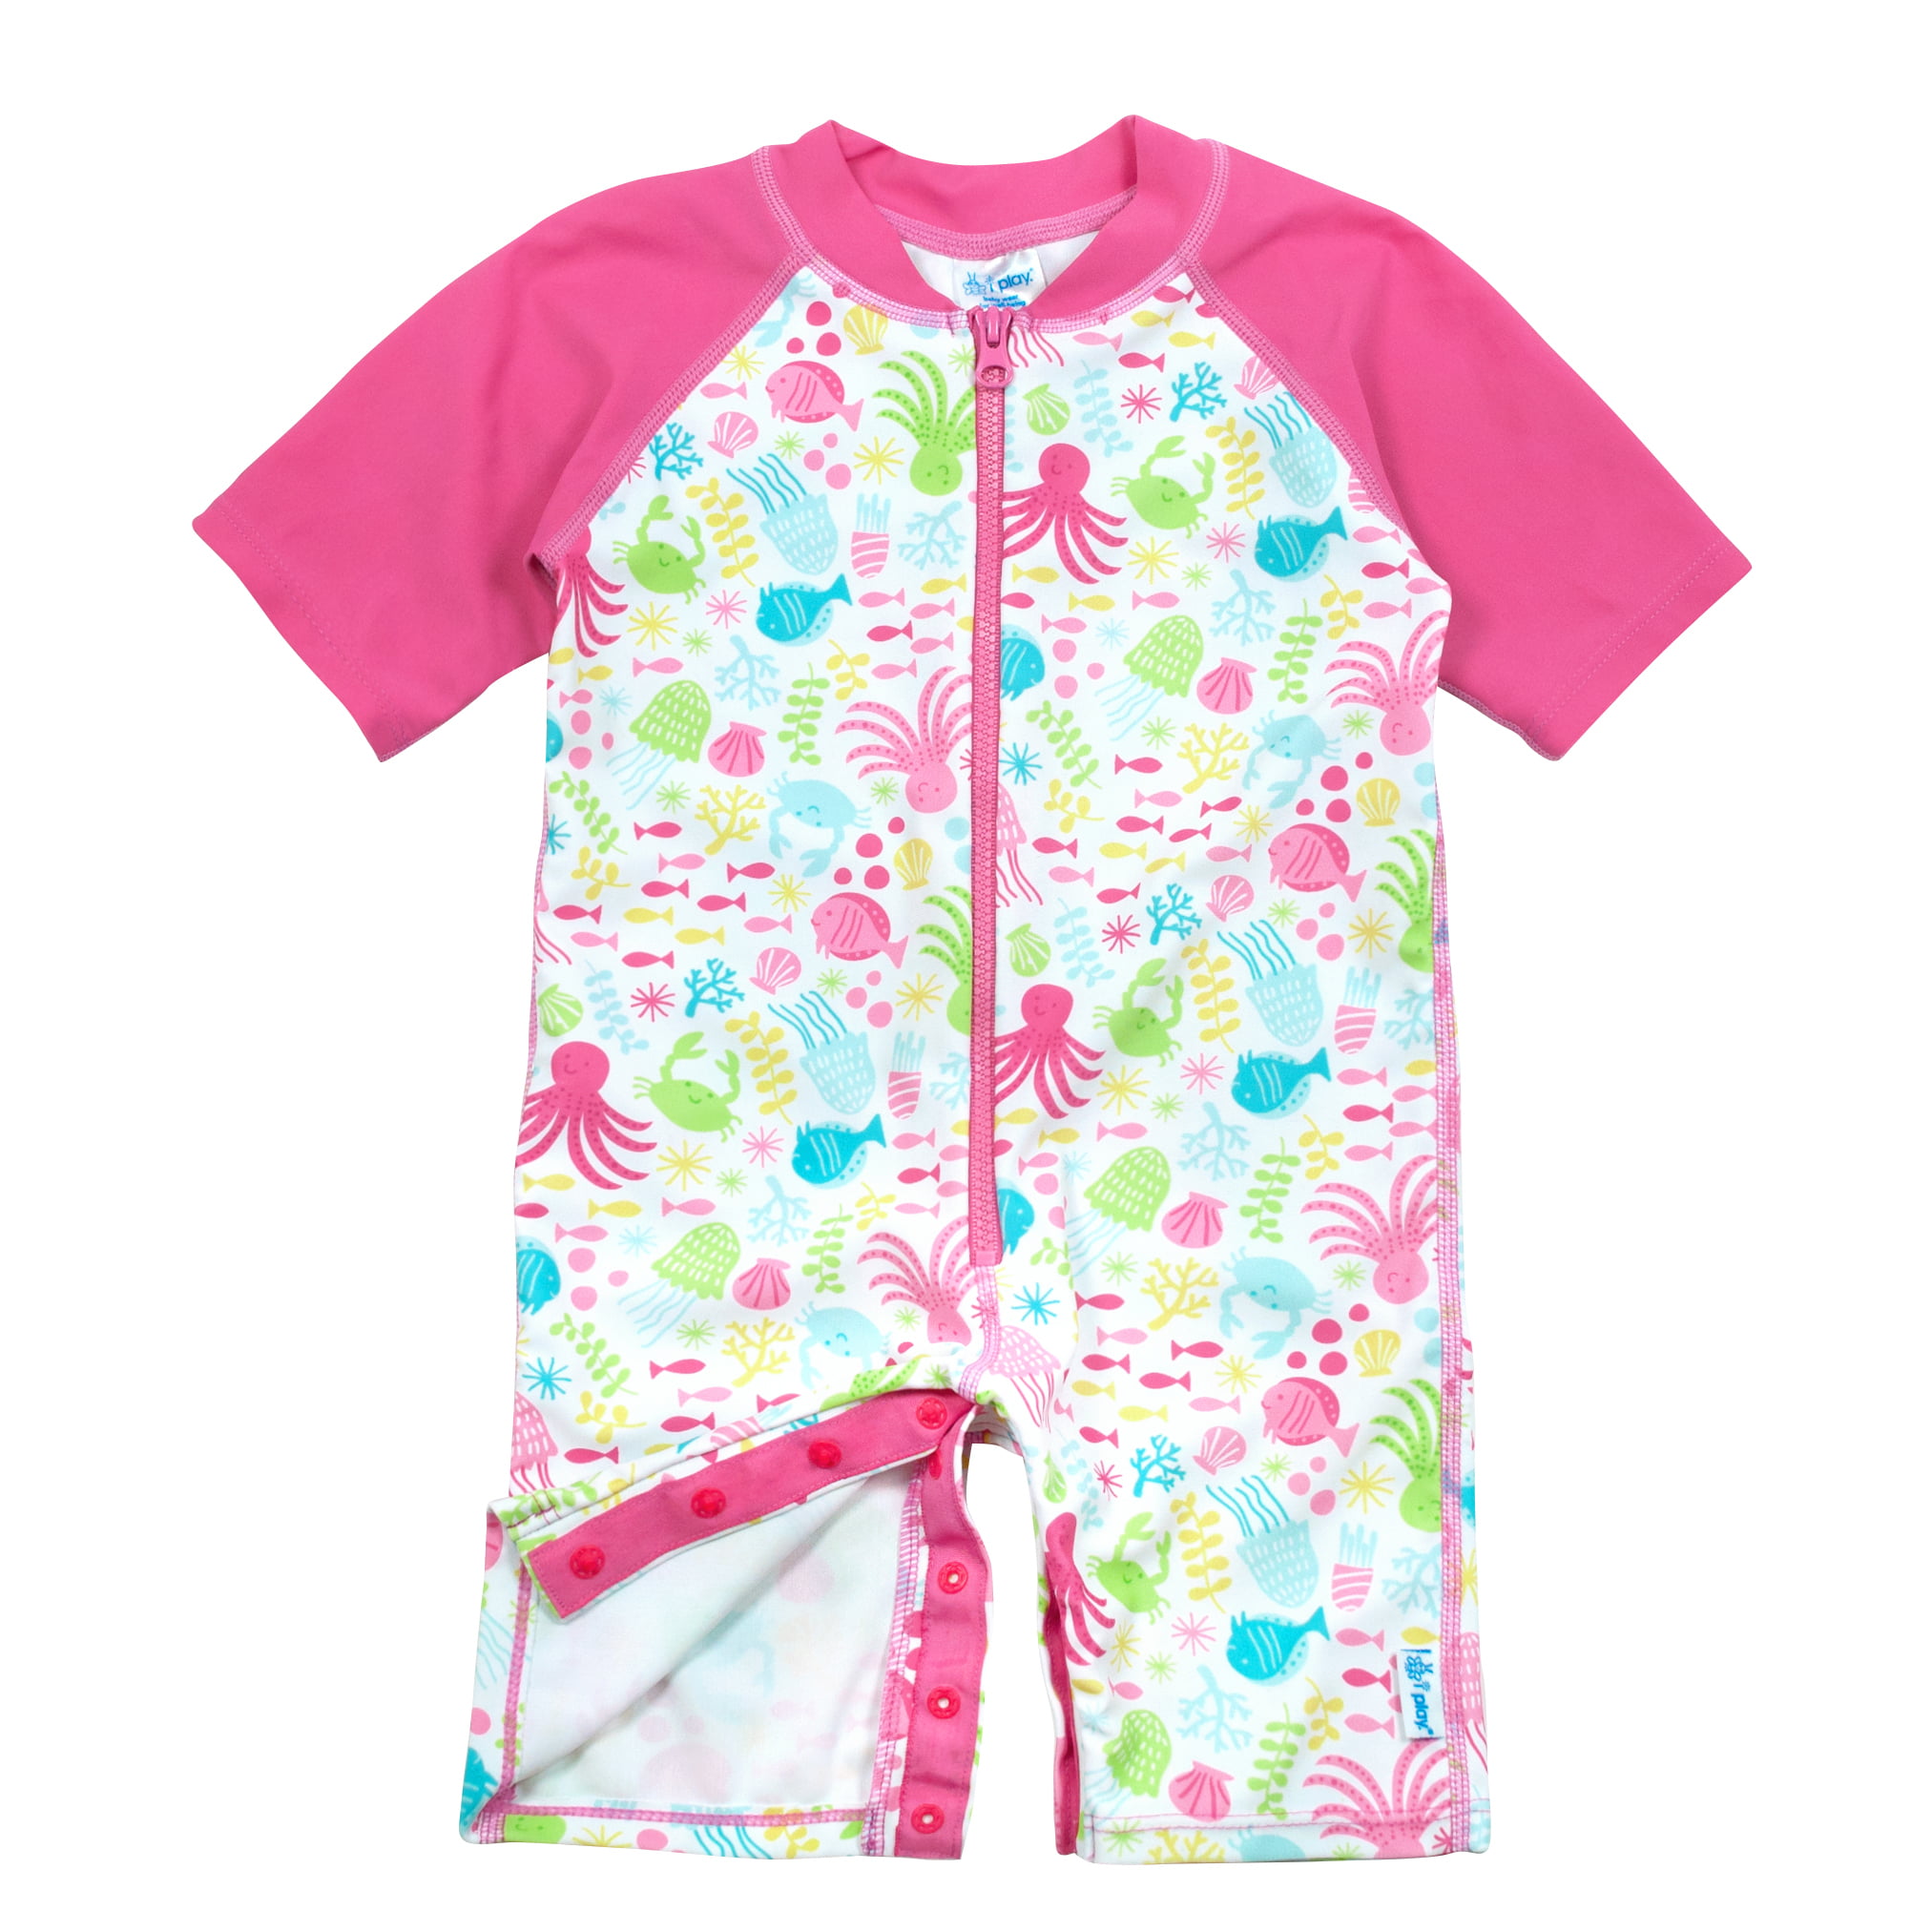 YOOJIA Baby Infant Girls One Piece Floral Ruffled Rash Guard Swimsuit Swimwear Sun Protective Swimming Costume UPF 50+